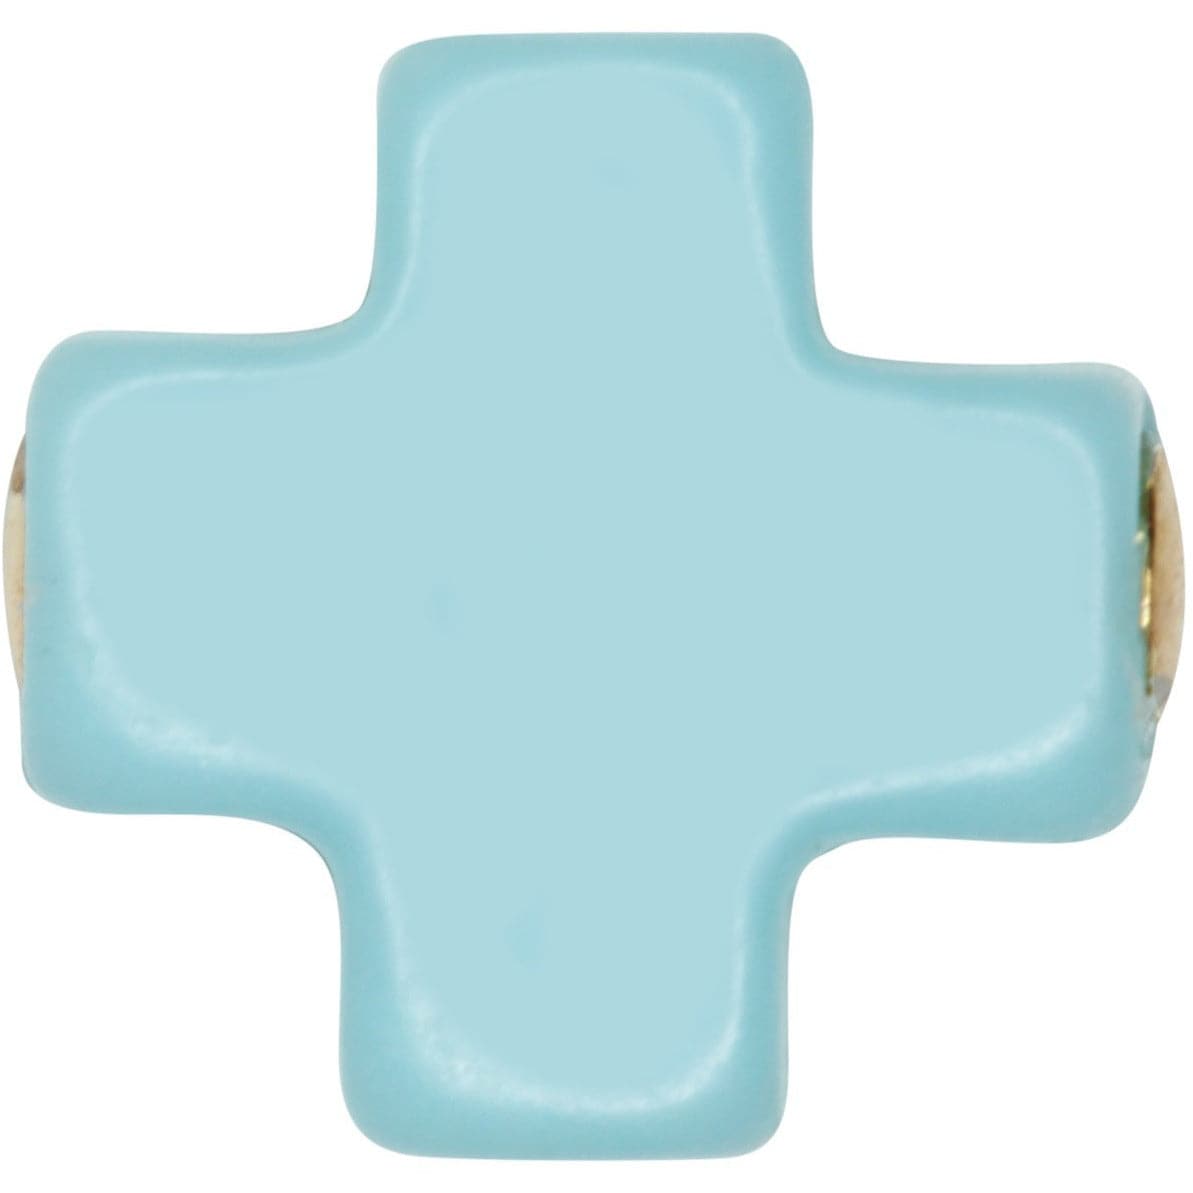 Enewton - earring - Signature Cross Studs - Turquoise - Findlay Rowe Designs